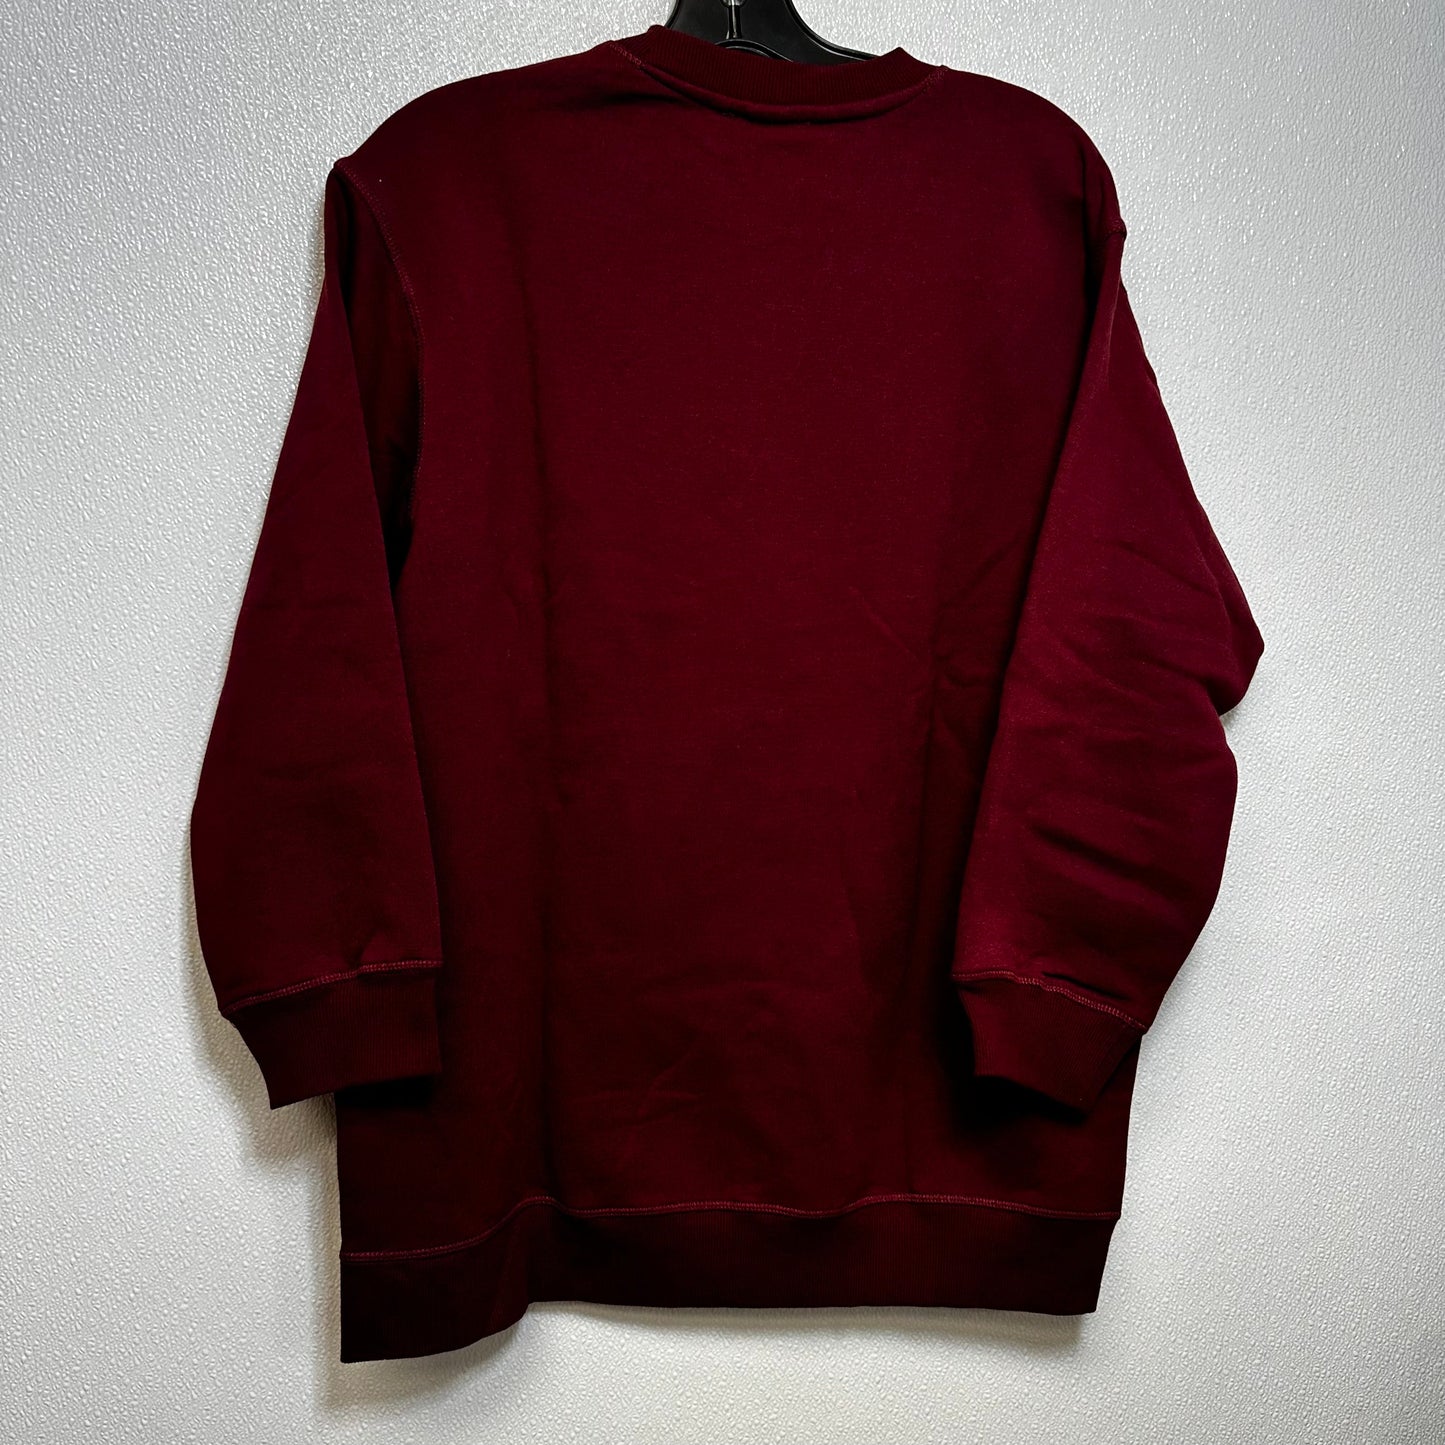 Maroon Sweatshirt Crewneck H&m, Size S